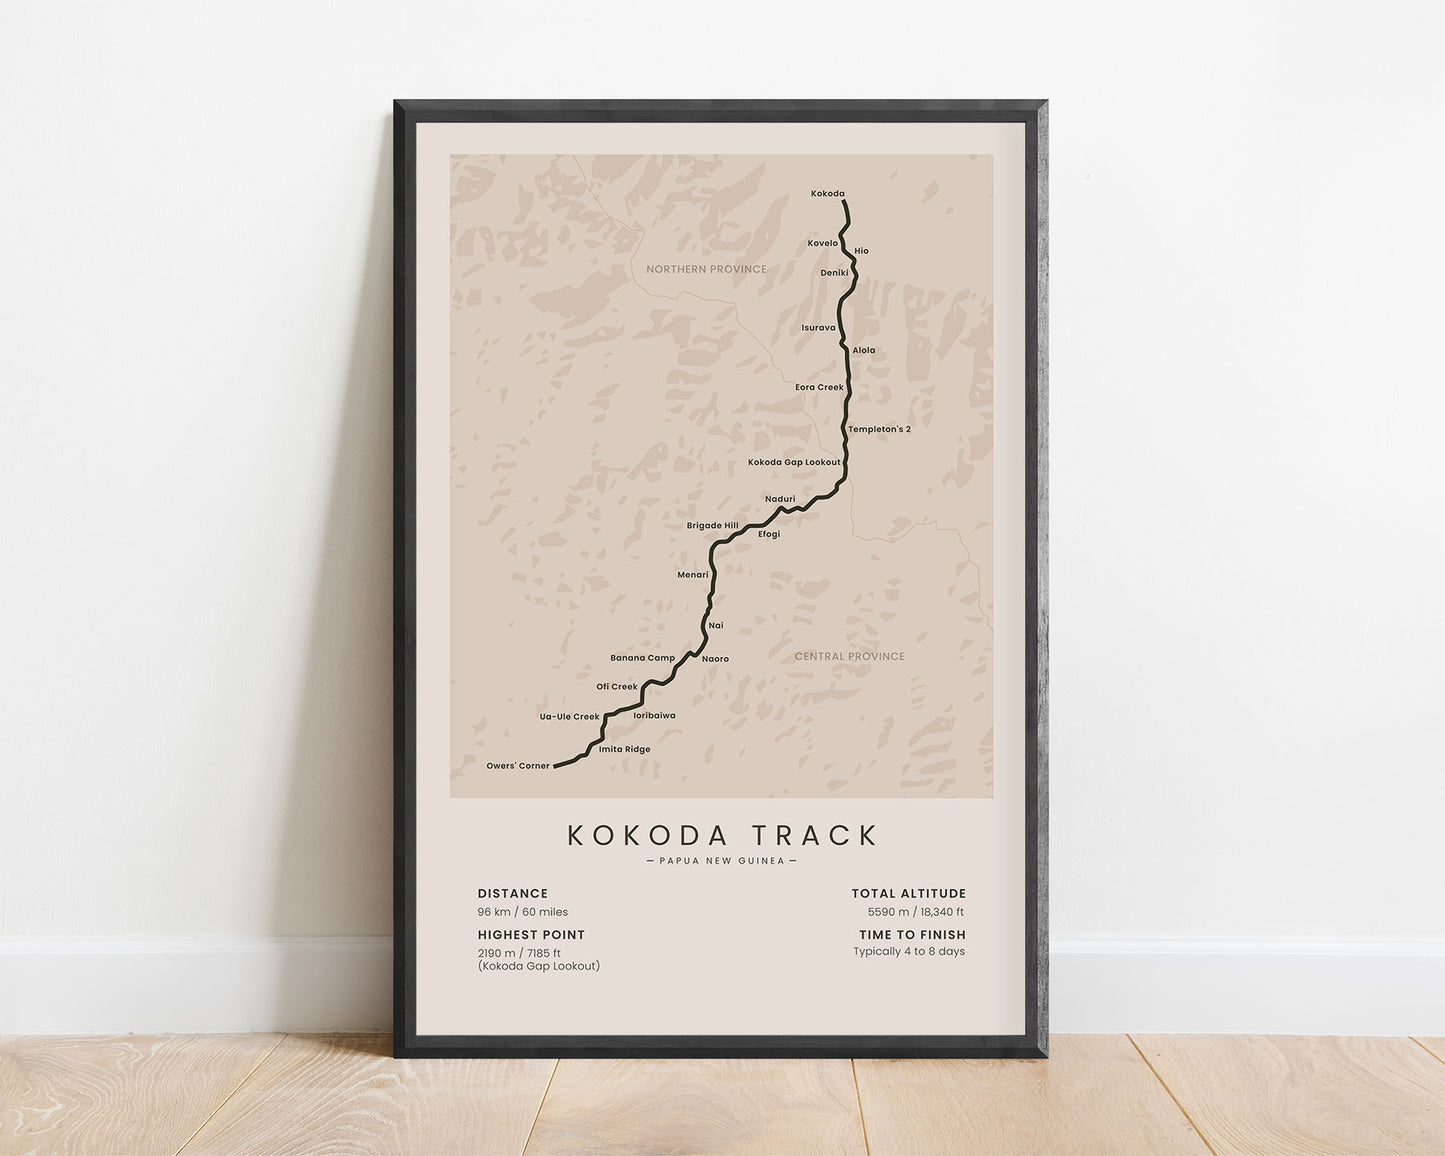 Kokoda Track (Papa New Guinea) thru-hike poster with beige background